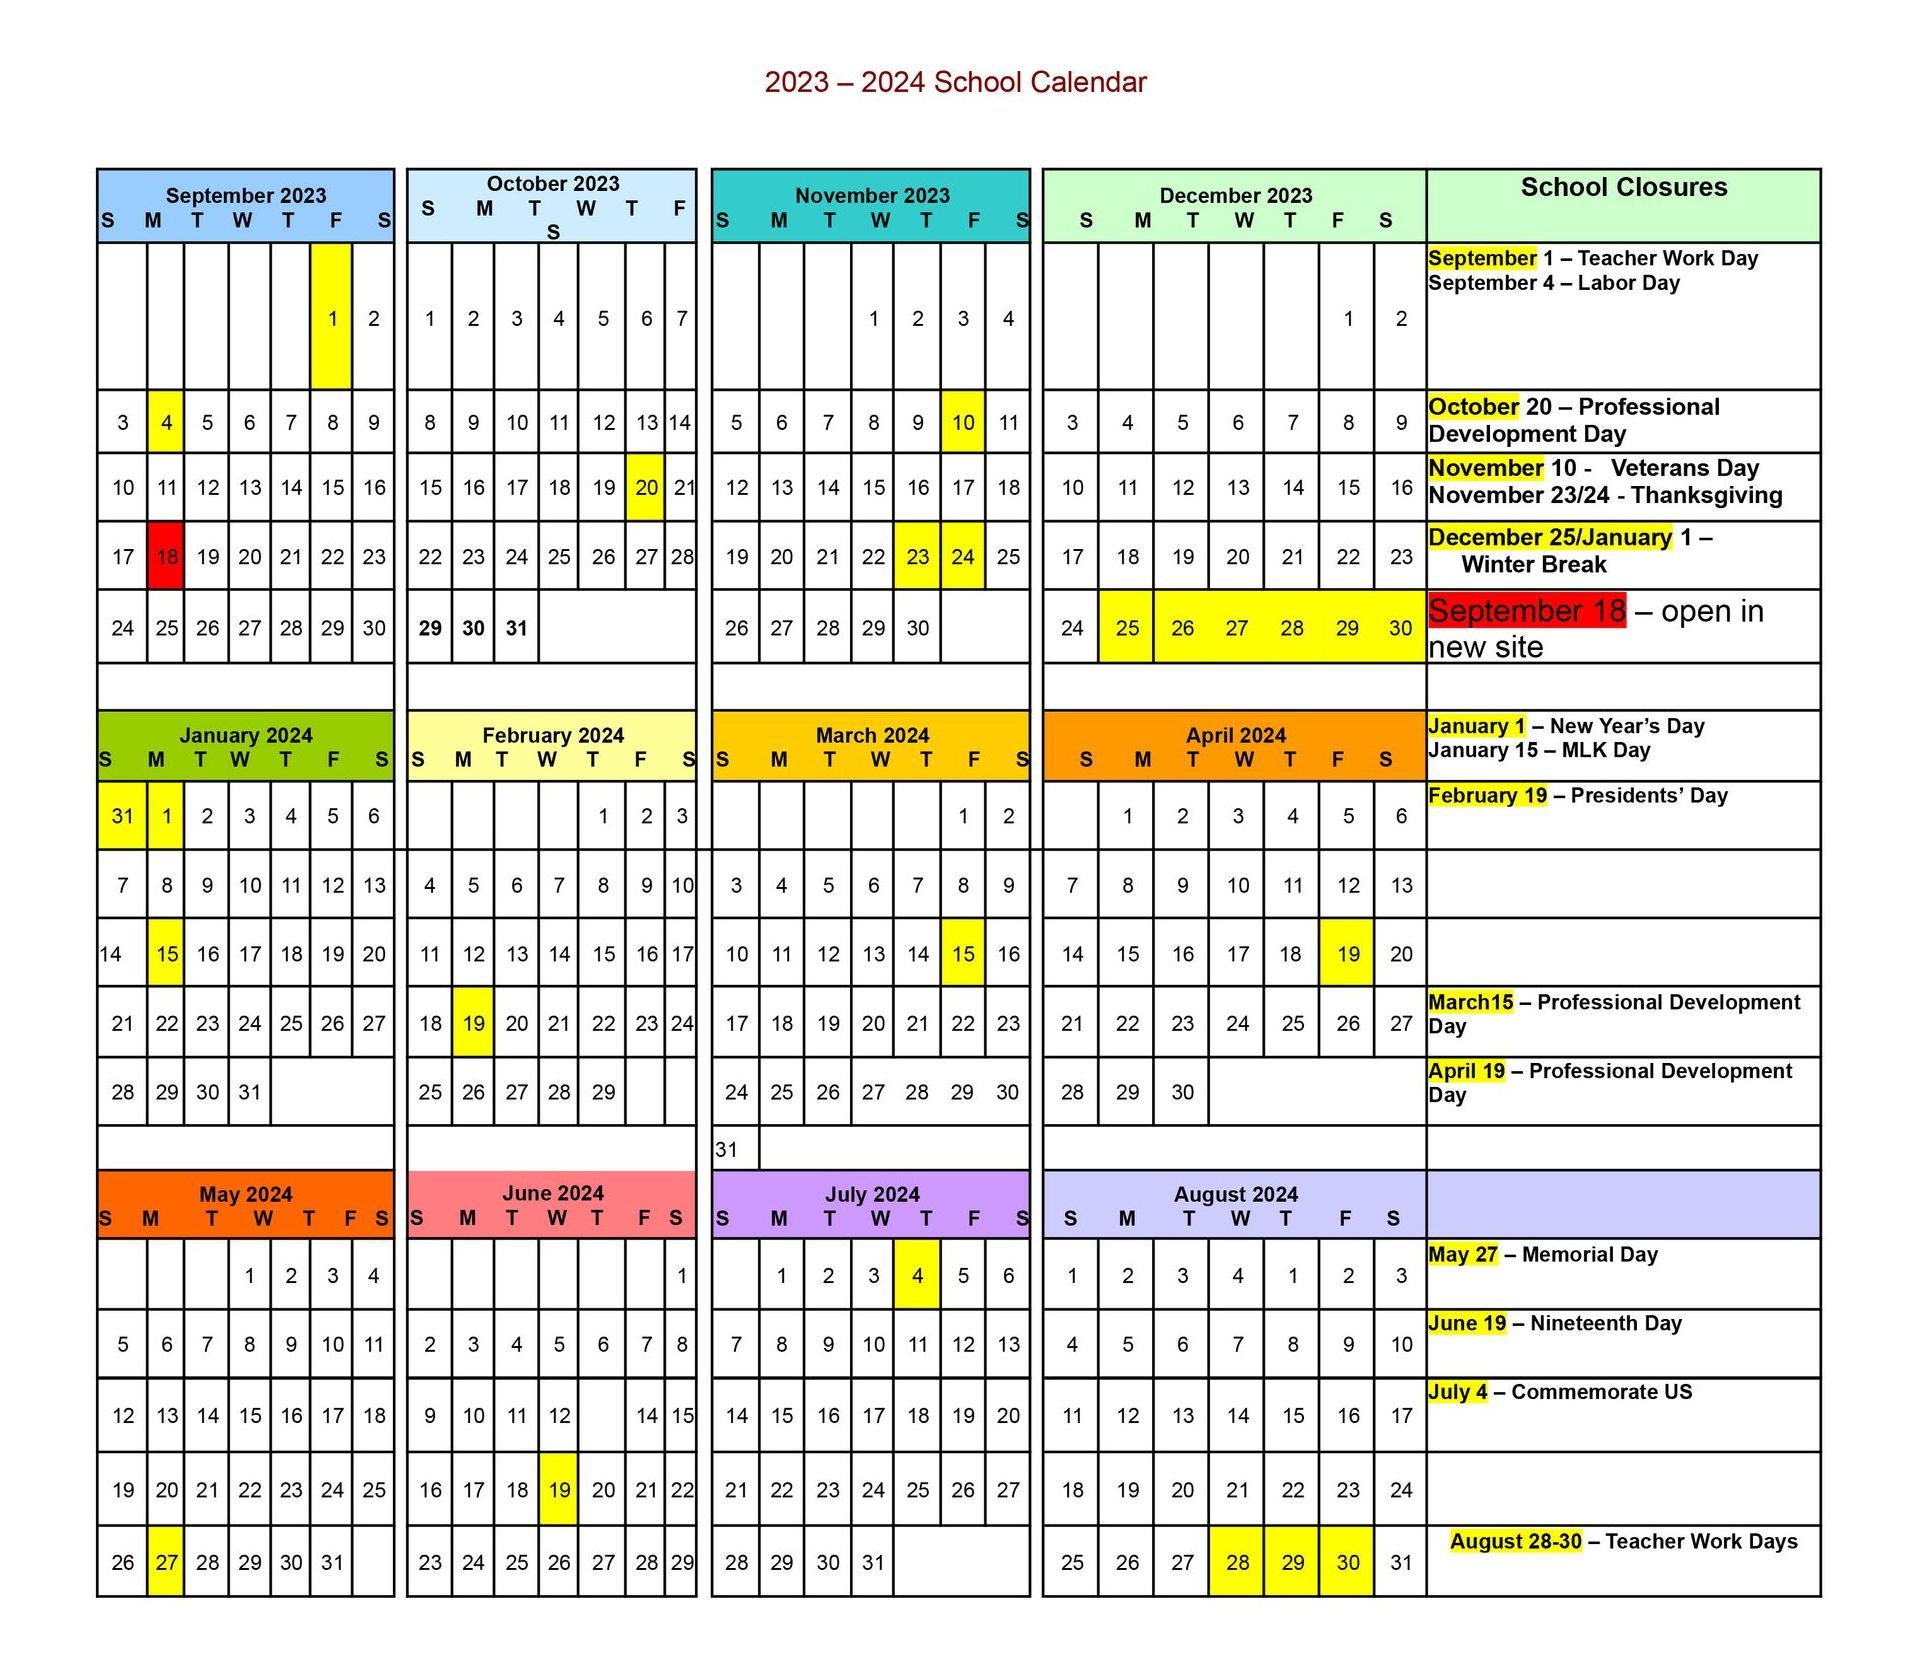 MISB Calendar 2023-2024